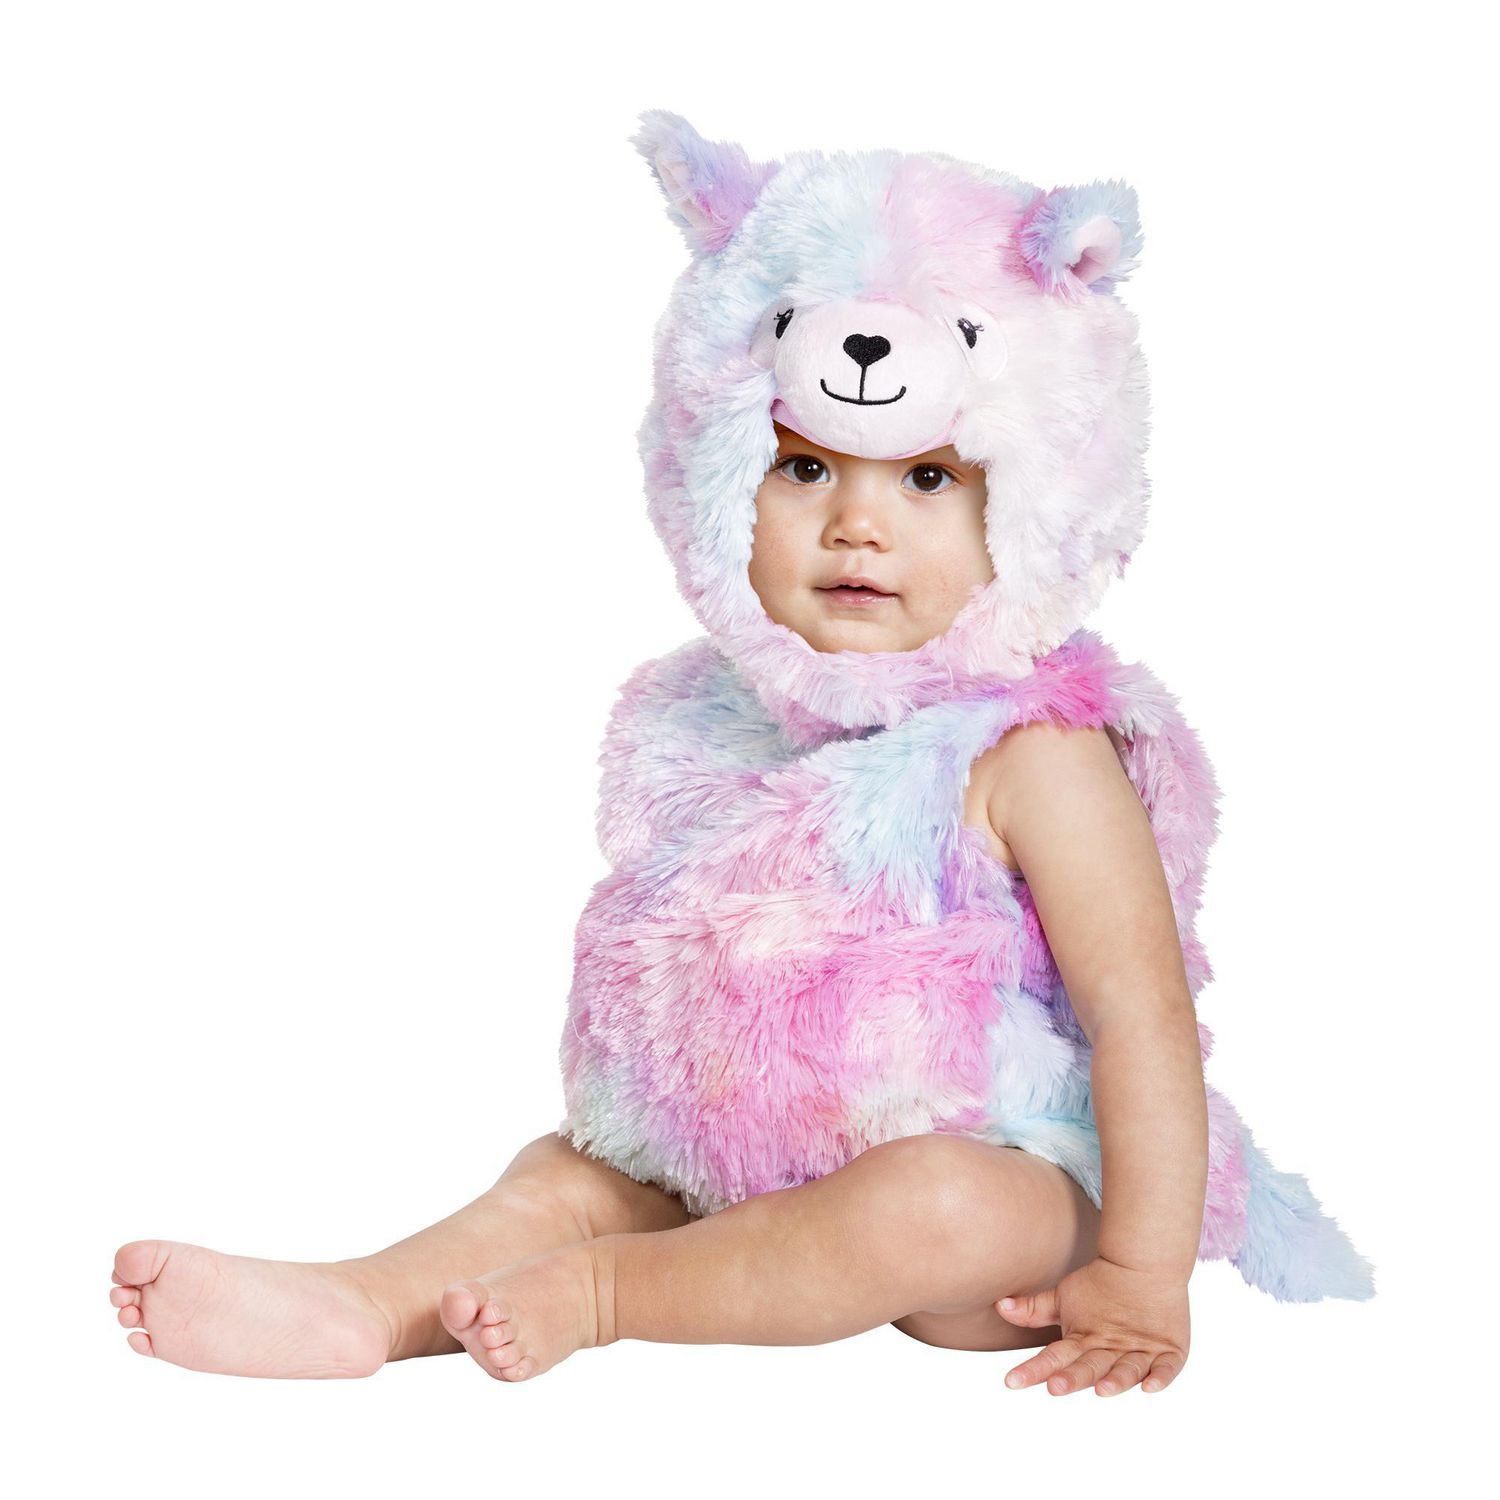 Details about   Opus Collection LLAMA Costume Infant Sz 1-2 Jumpsuit Headpiece Dress Up NEW 